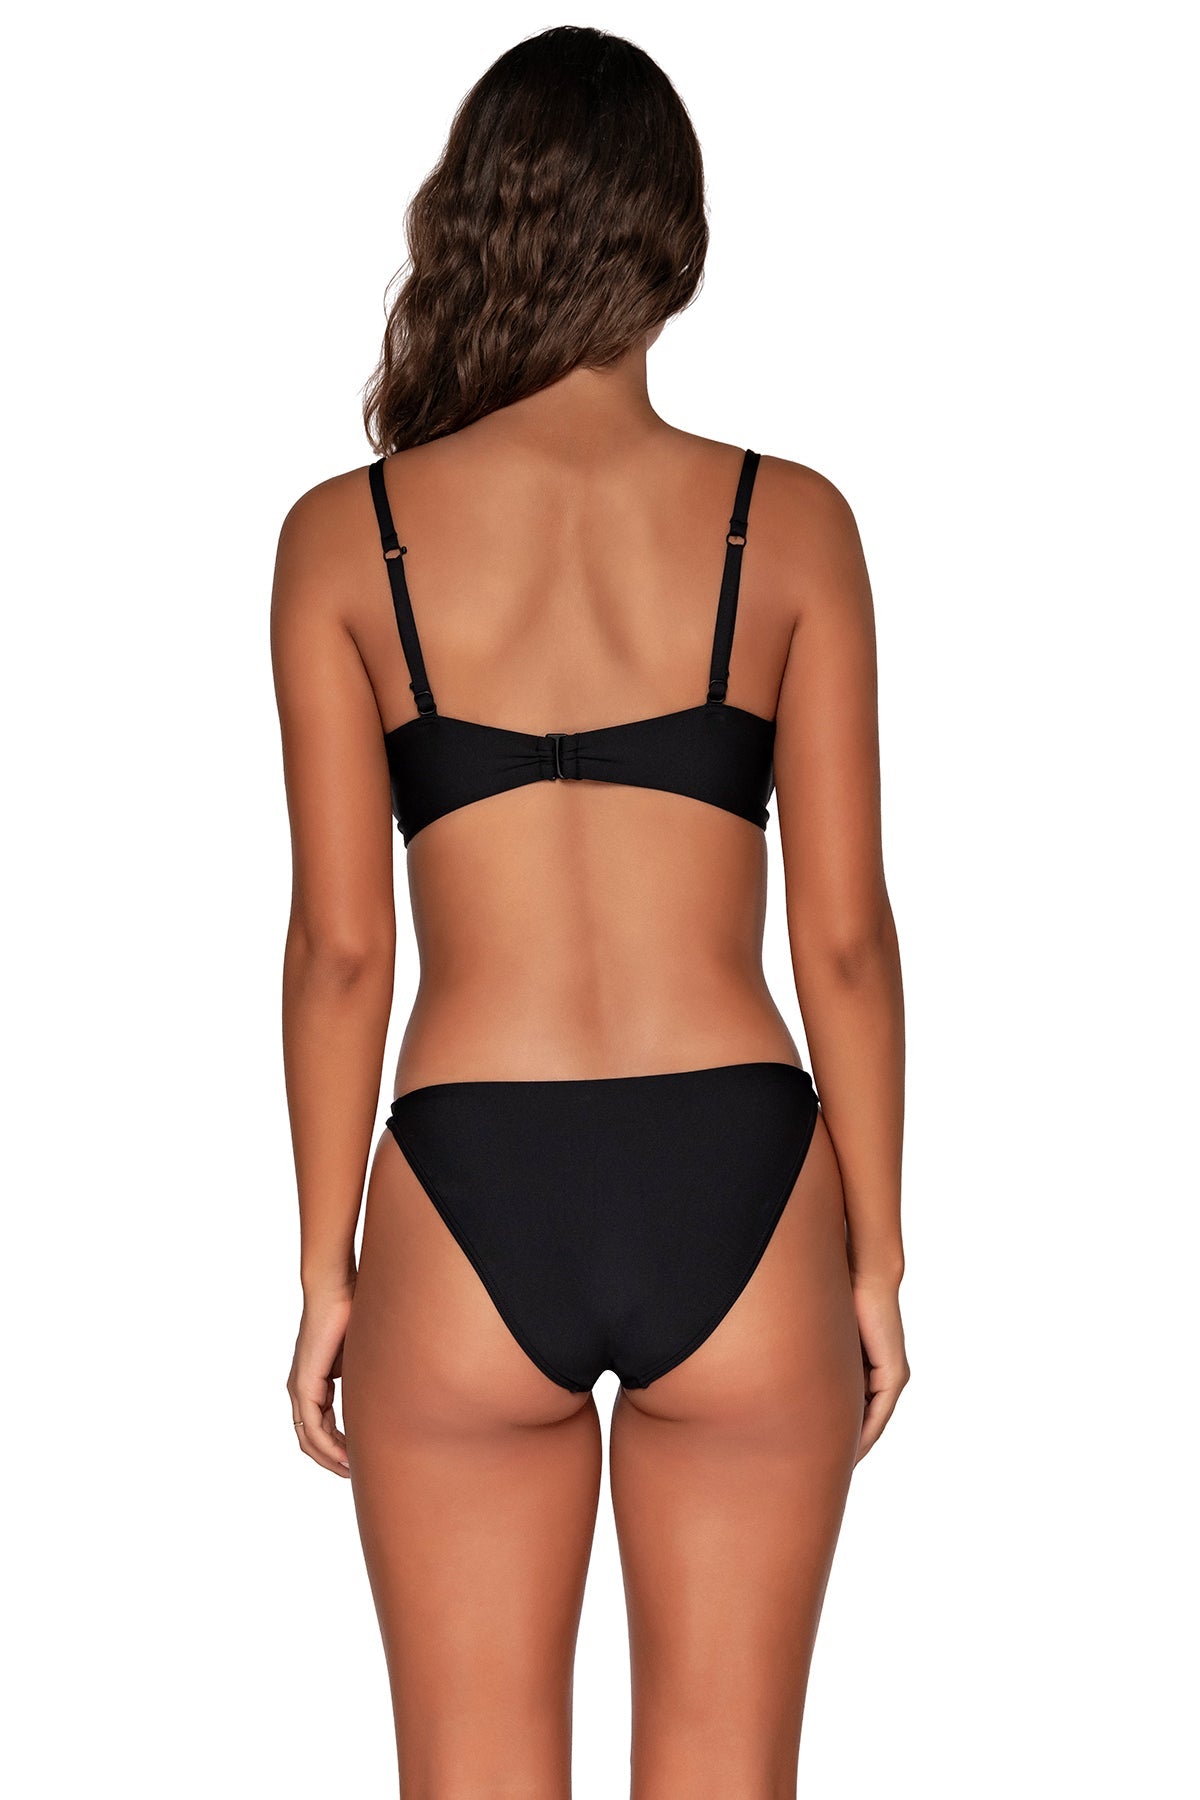 Back view of Swim Systems Onyx Black Leah Bottom with matching Avila Underwire bikini top